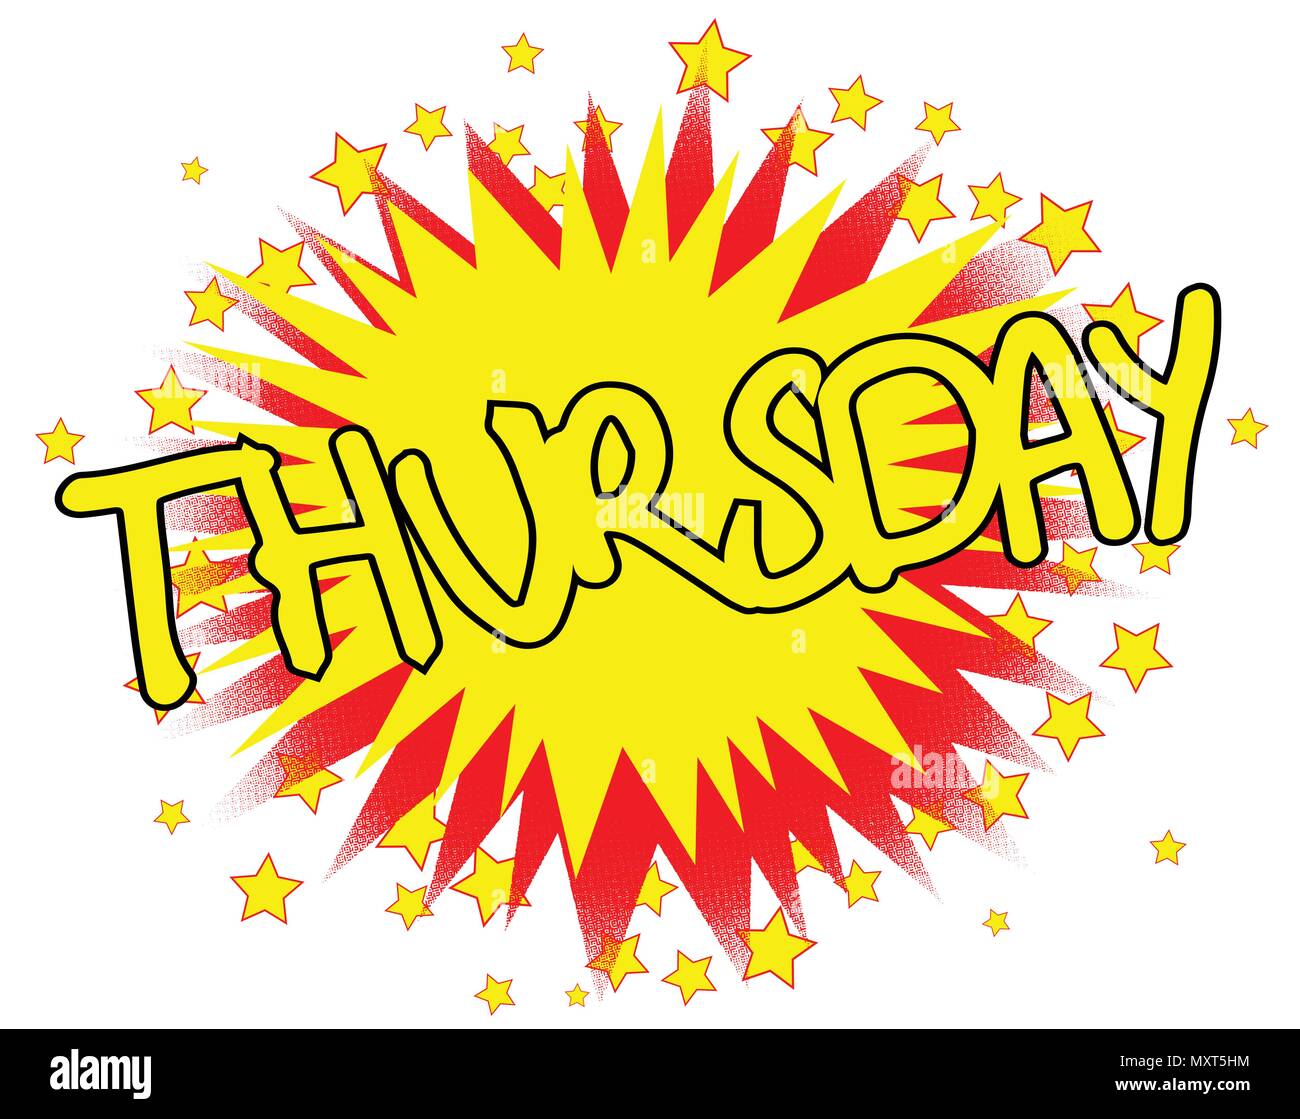 A cartoon style Thursday splash explosive motif over a white background Stock Vector